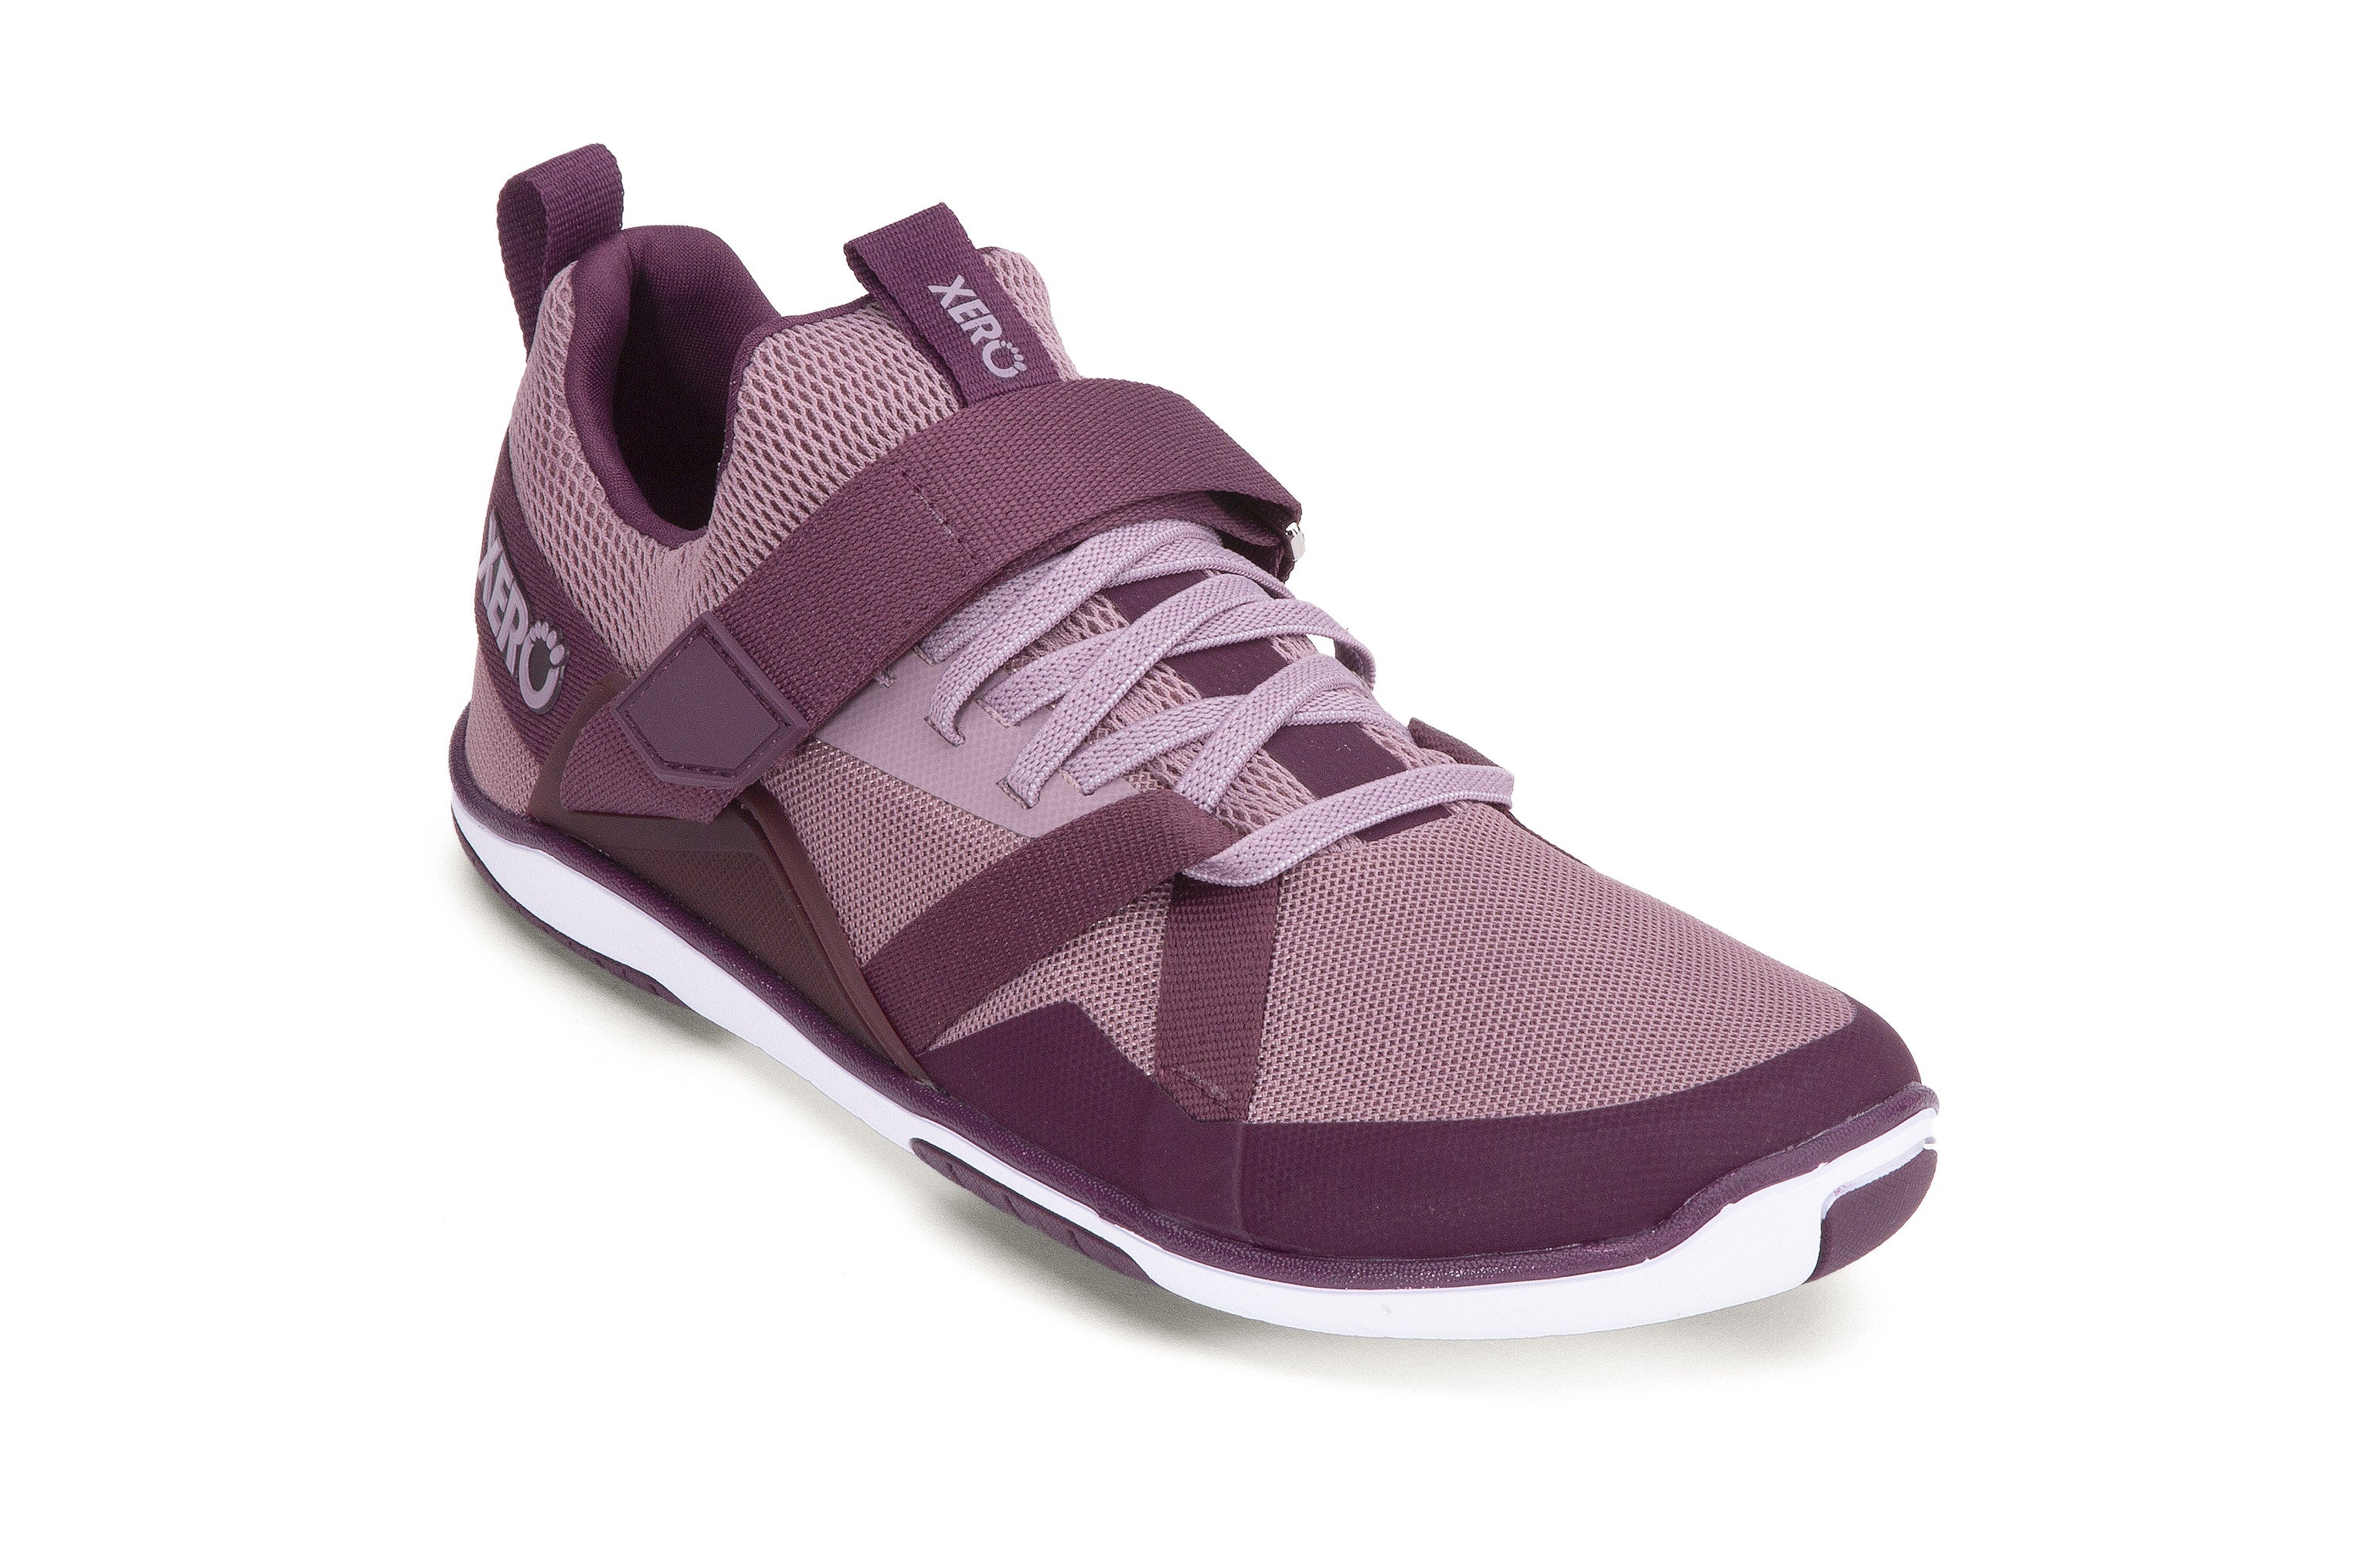 Xero Shoes Forza Trainer Womens barfods træningssko til kvinder i farven elderberry / fig, vinklet